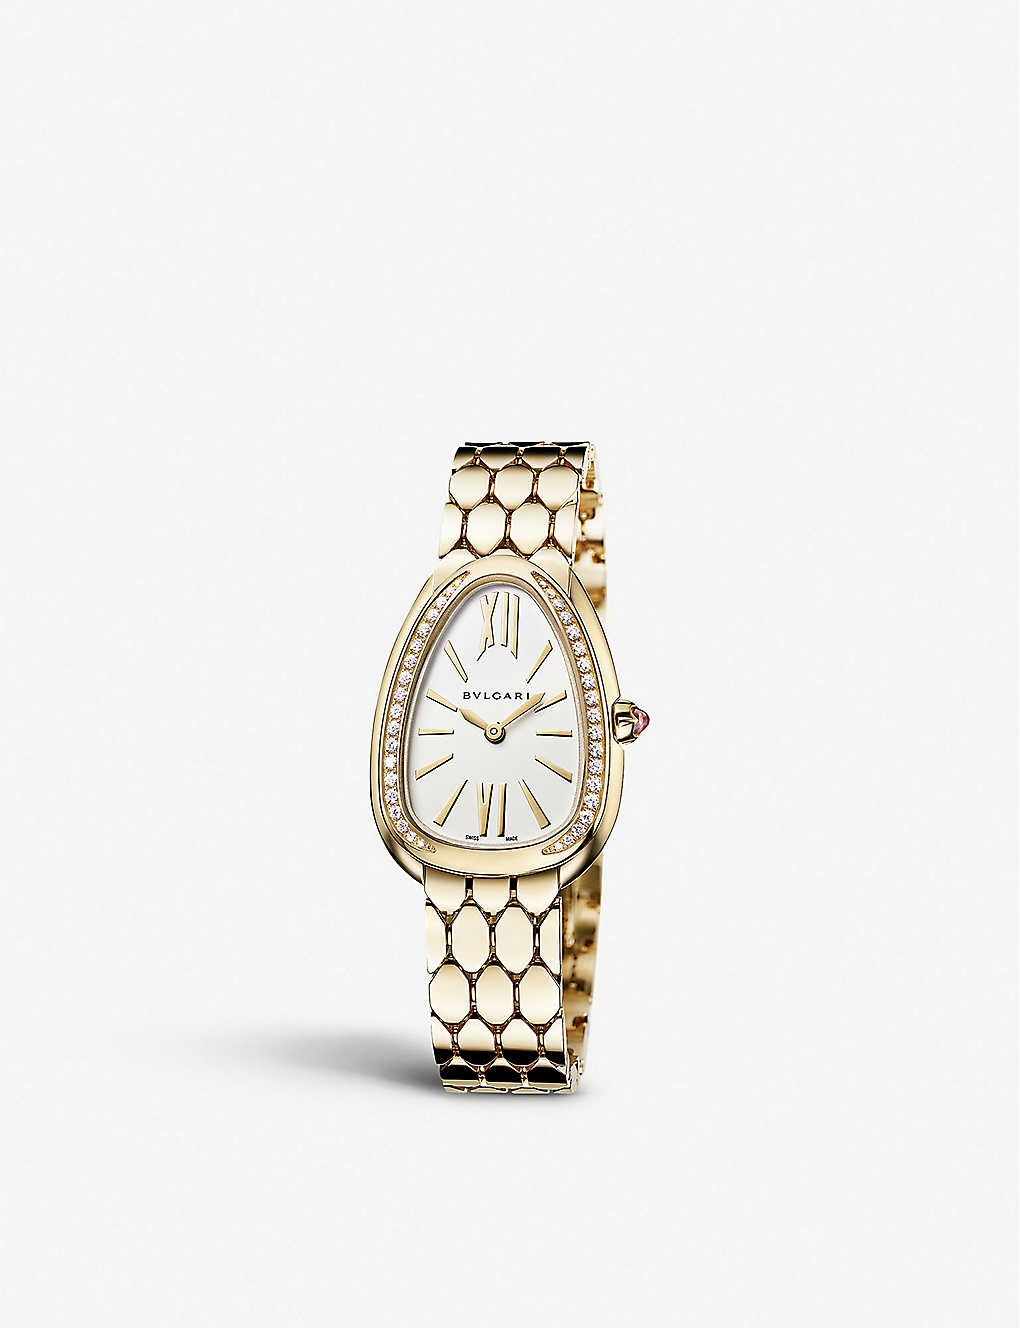 103147 Serpenti Seduttori 18ct yellow-gold and diamond quartz watch - 3